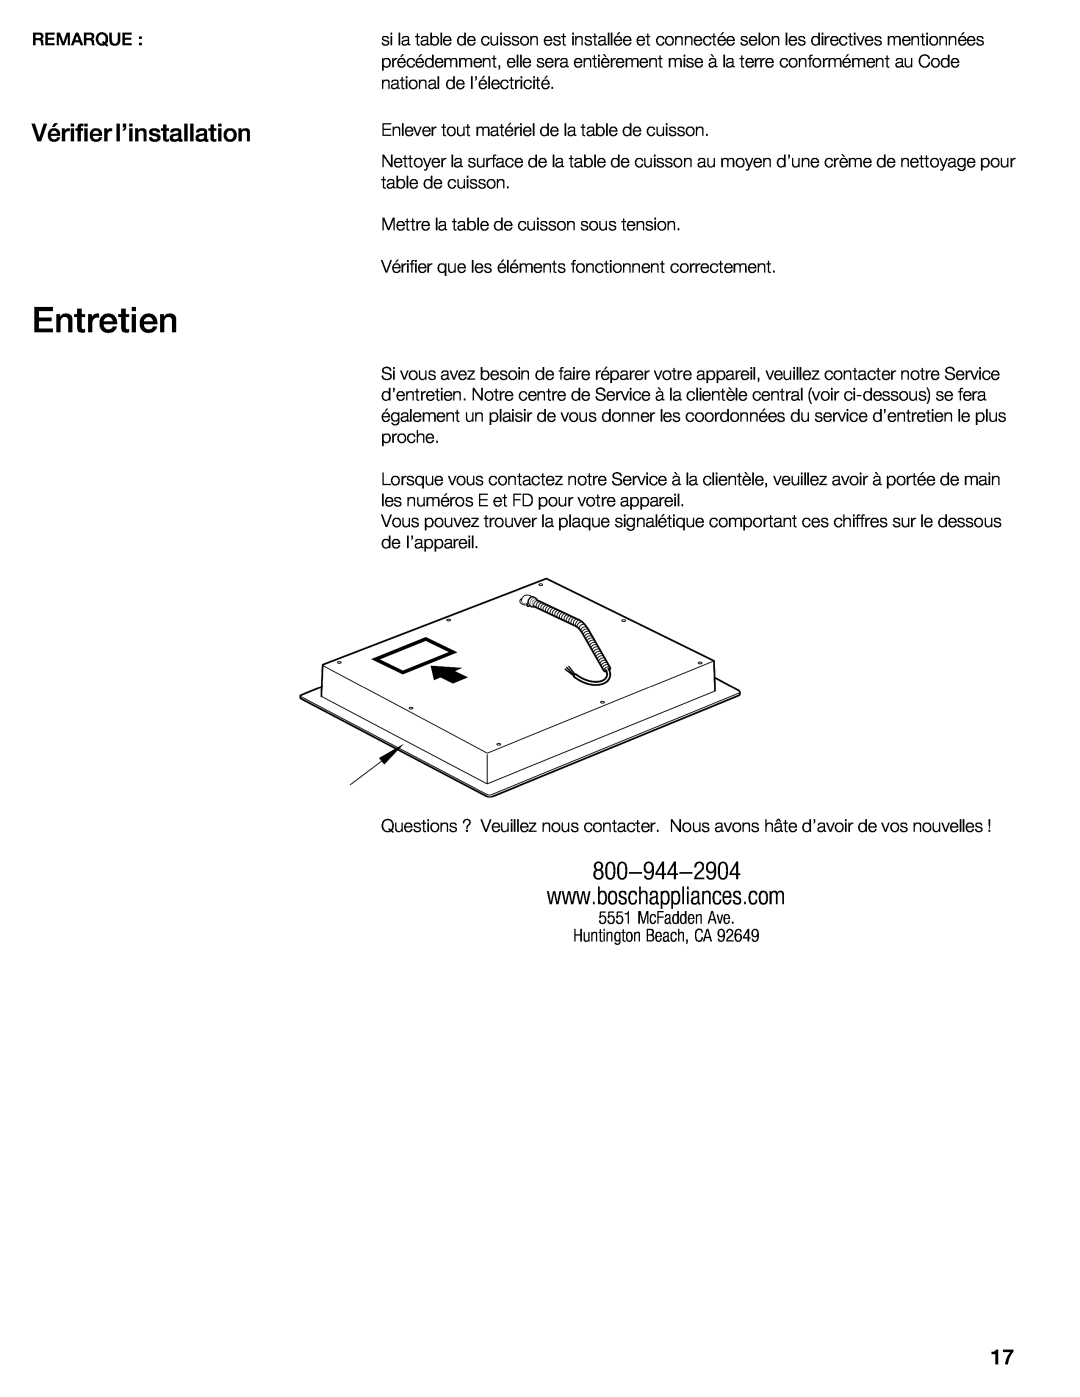 Bosch Appliances NIT8653UC manual Entretien, Vérifier linstallation 